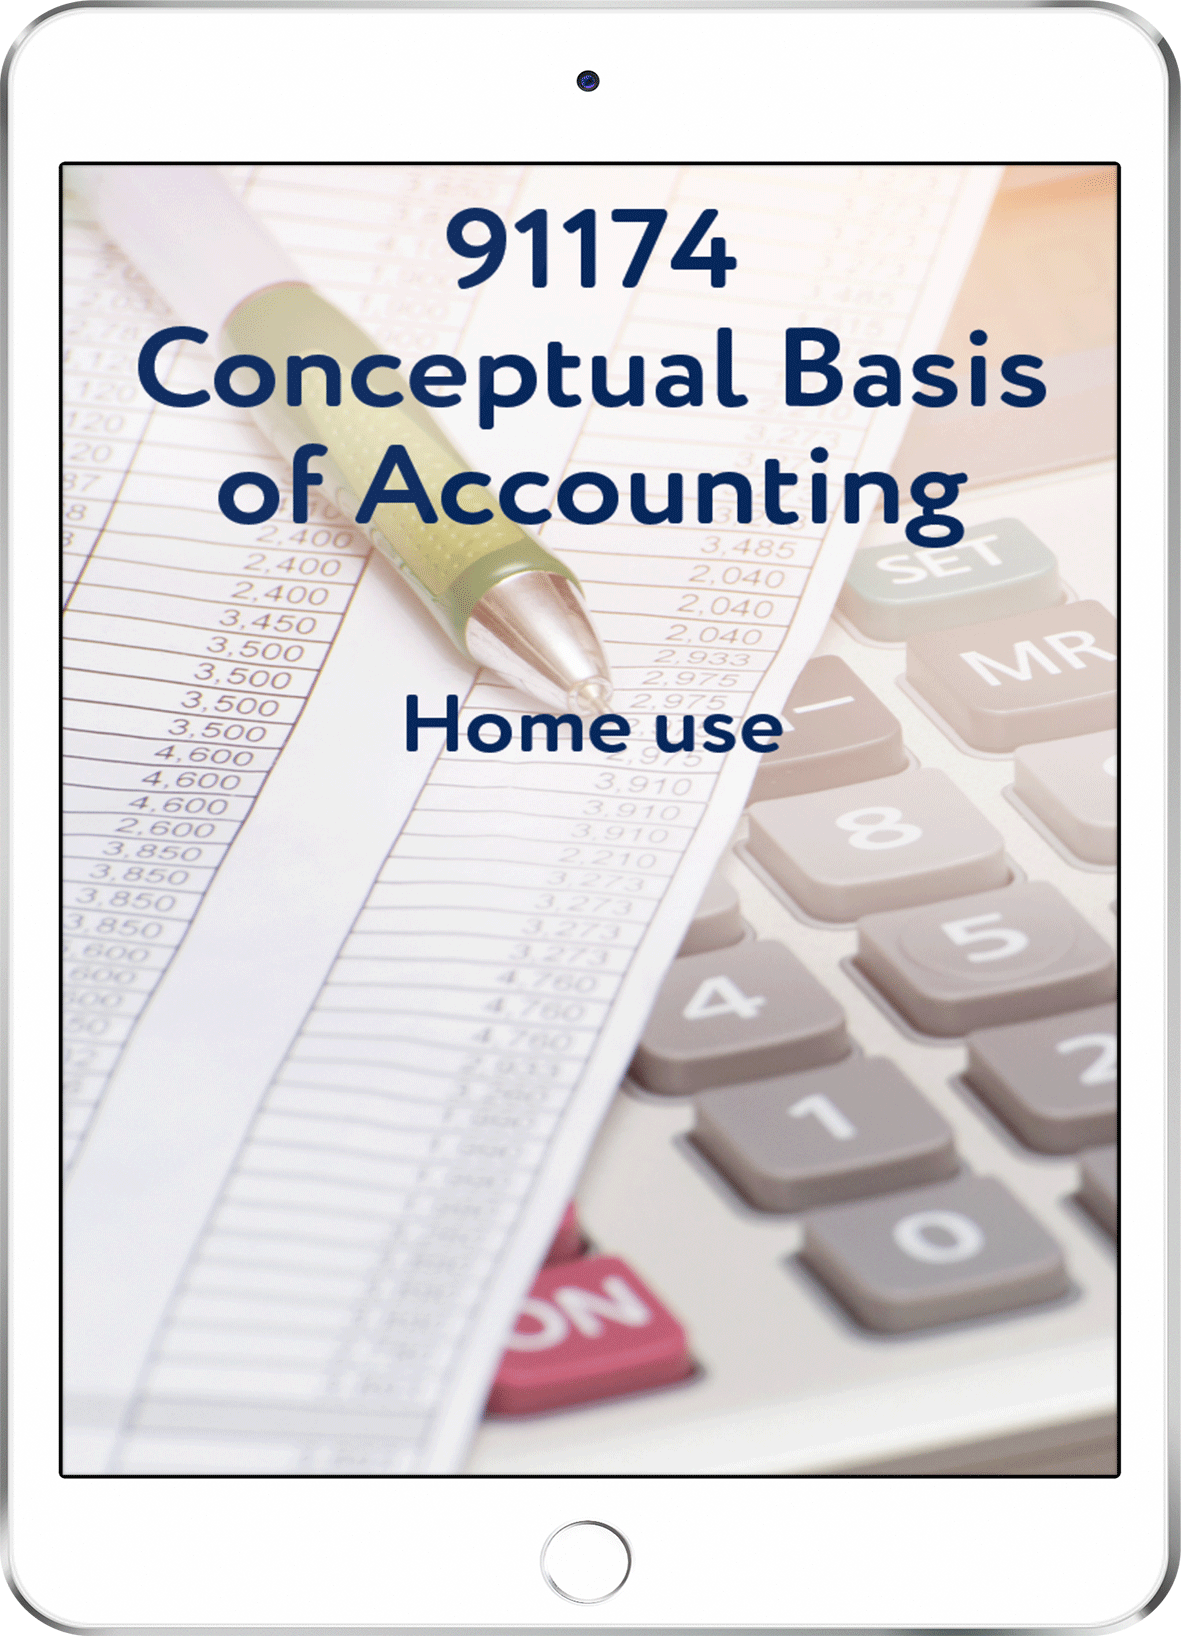 91174 Conceptual Basis of Accounting - Home Use